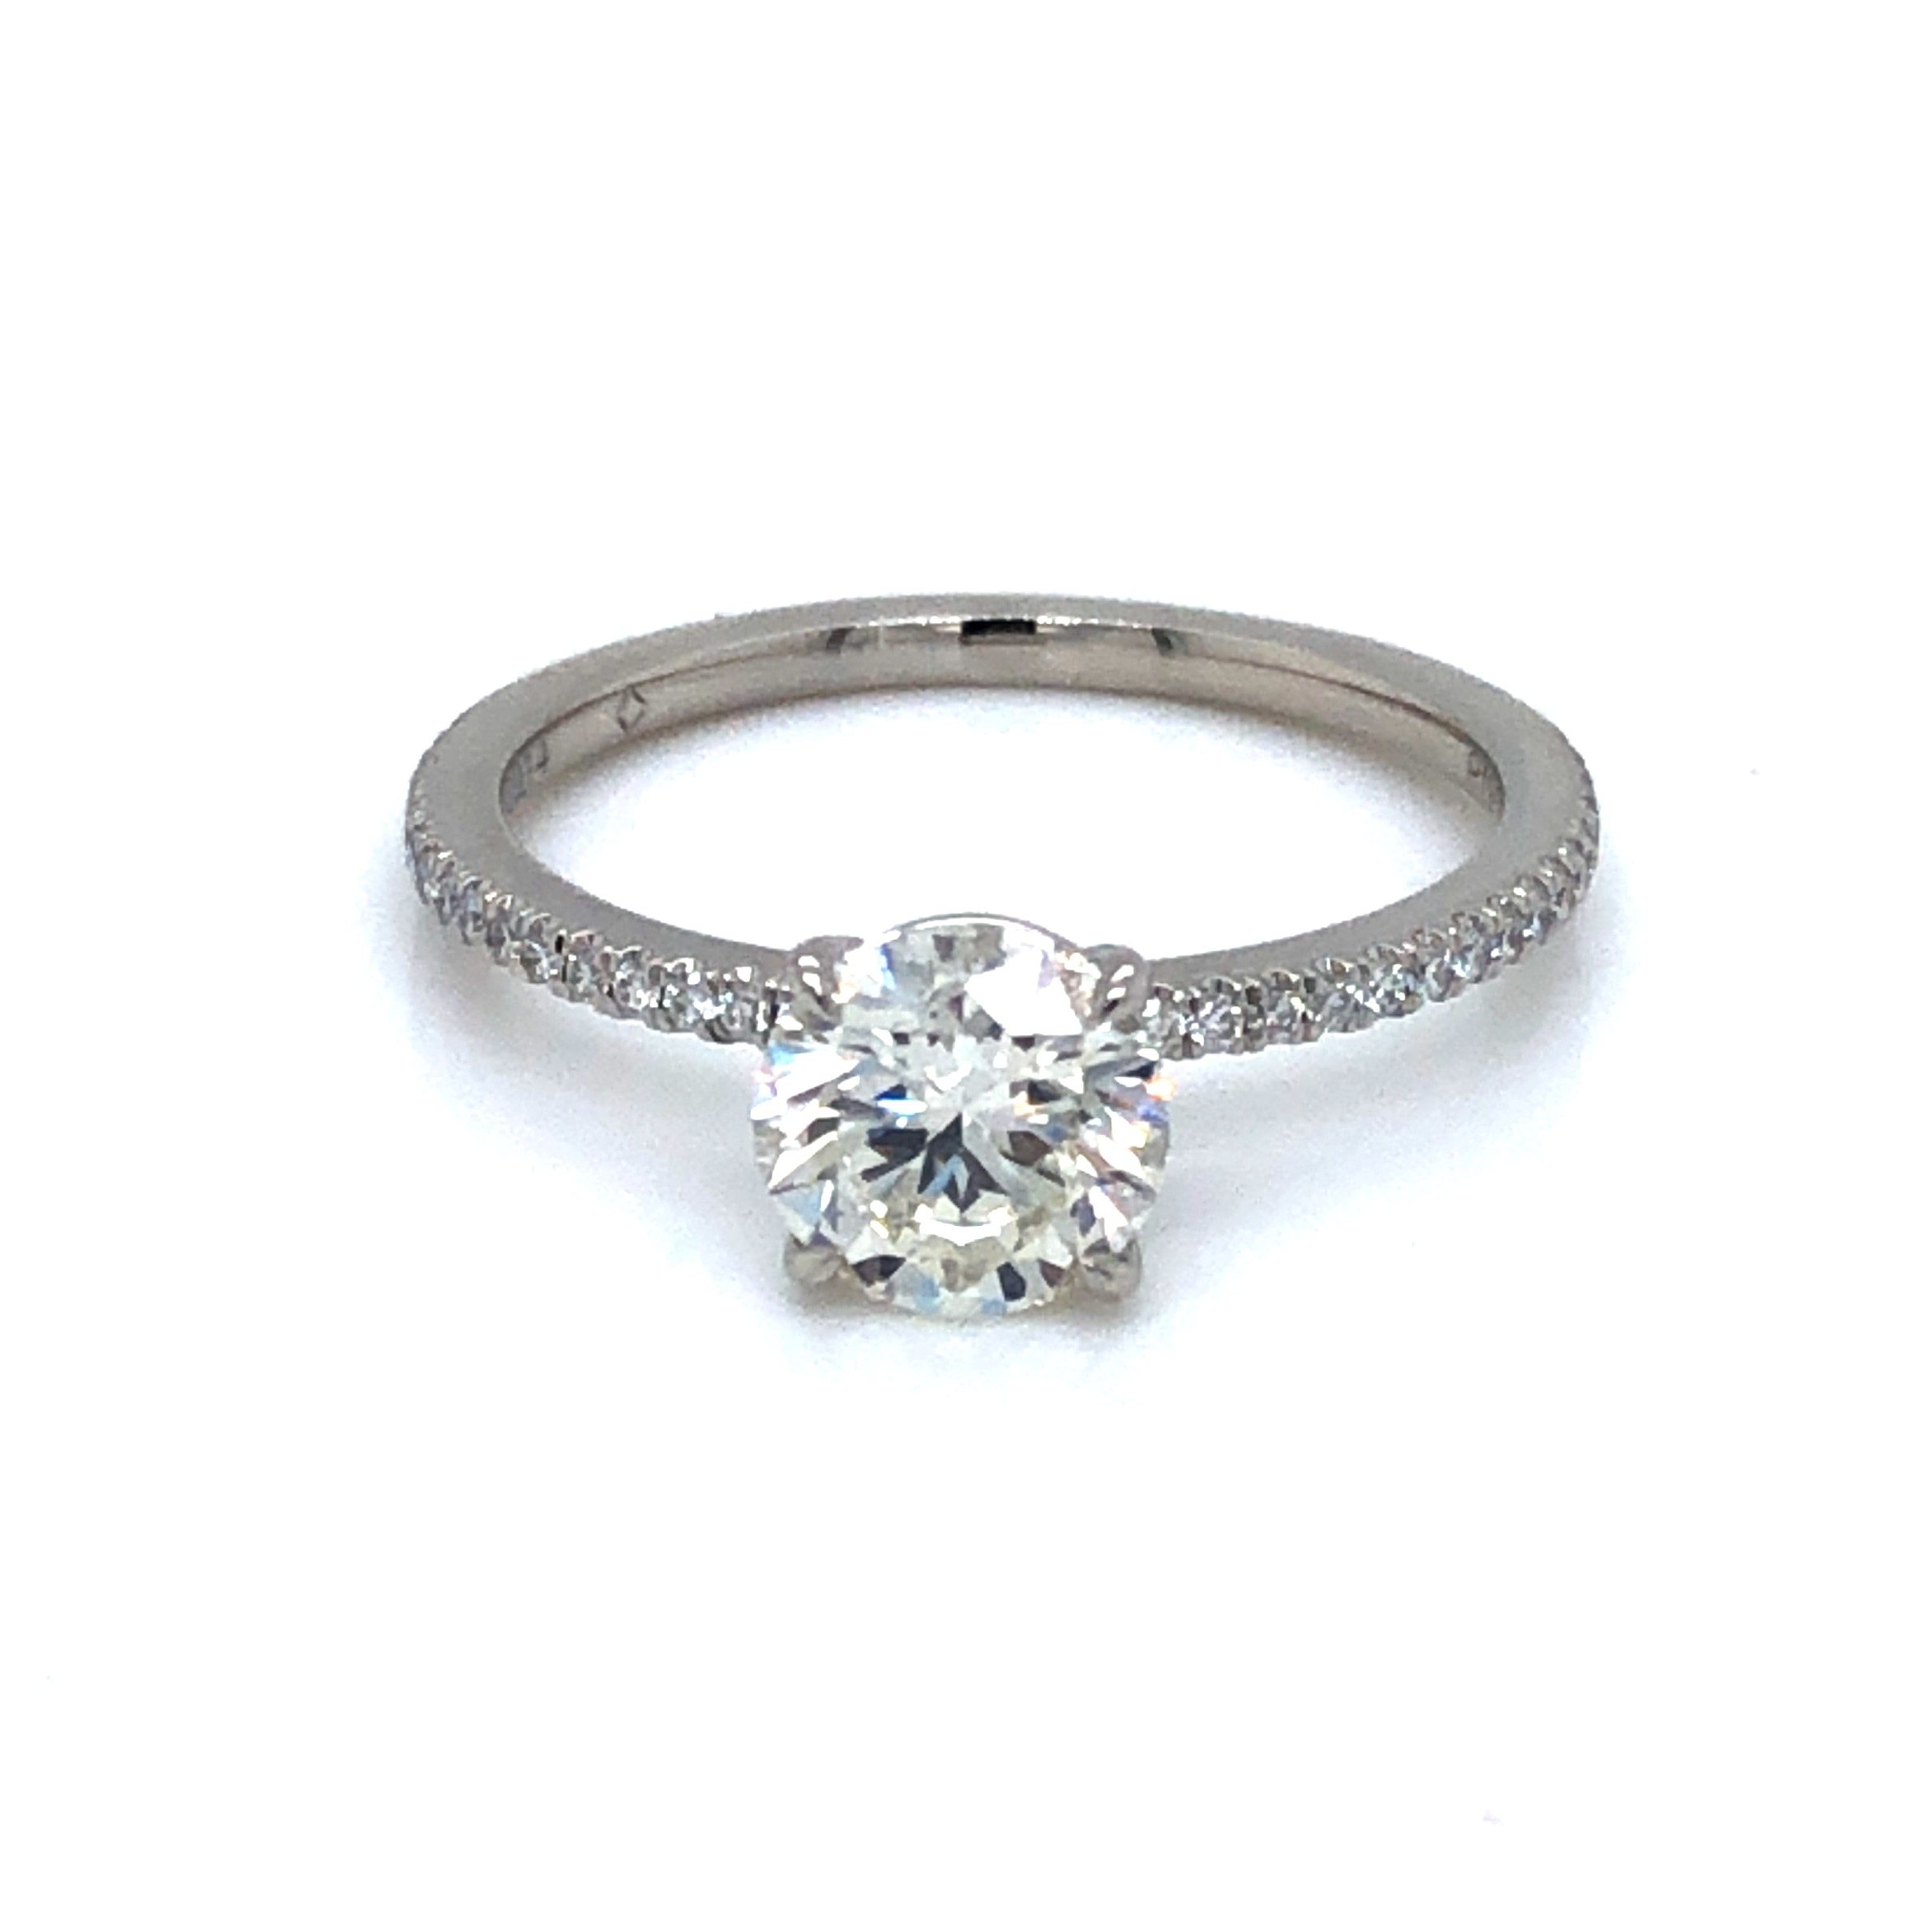 Platinum Engagement Ring With One 1.05Ct Round Brilliant J VS2 ForeverMark Diamond And 34=0.12Tw Round Brilliant G VS Diamonds